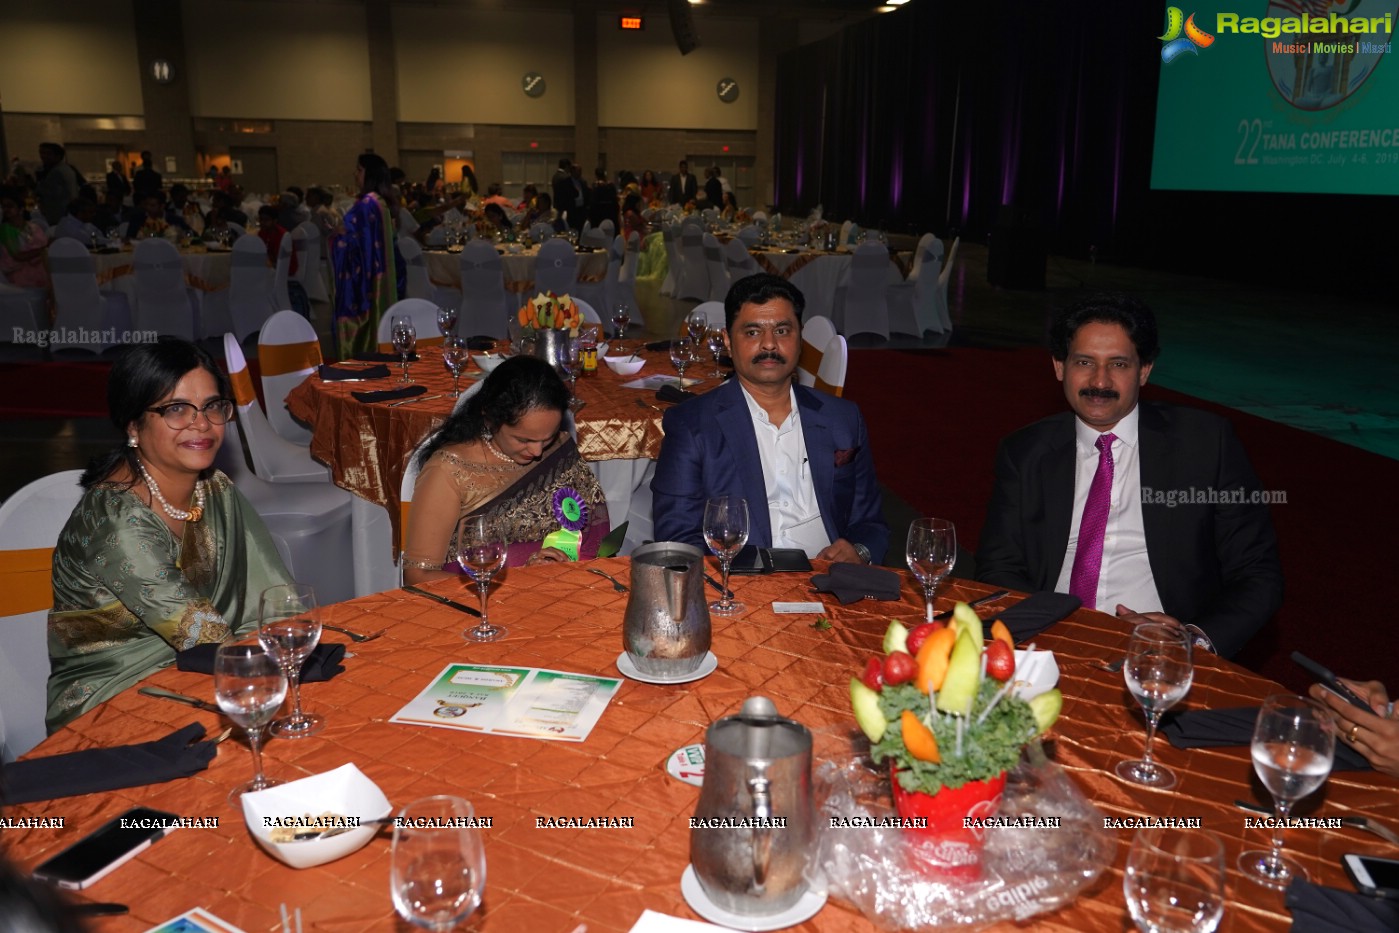 Telugu Association of North America (TANA) 22nd Convention Banquet Washington, D.C.